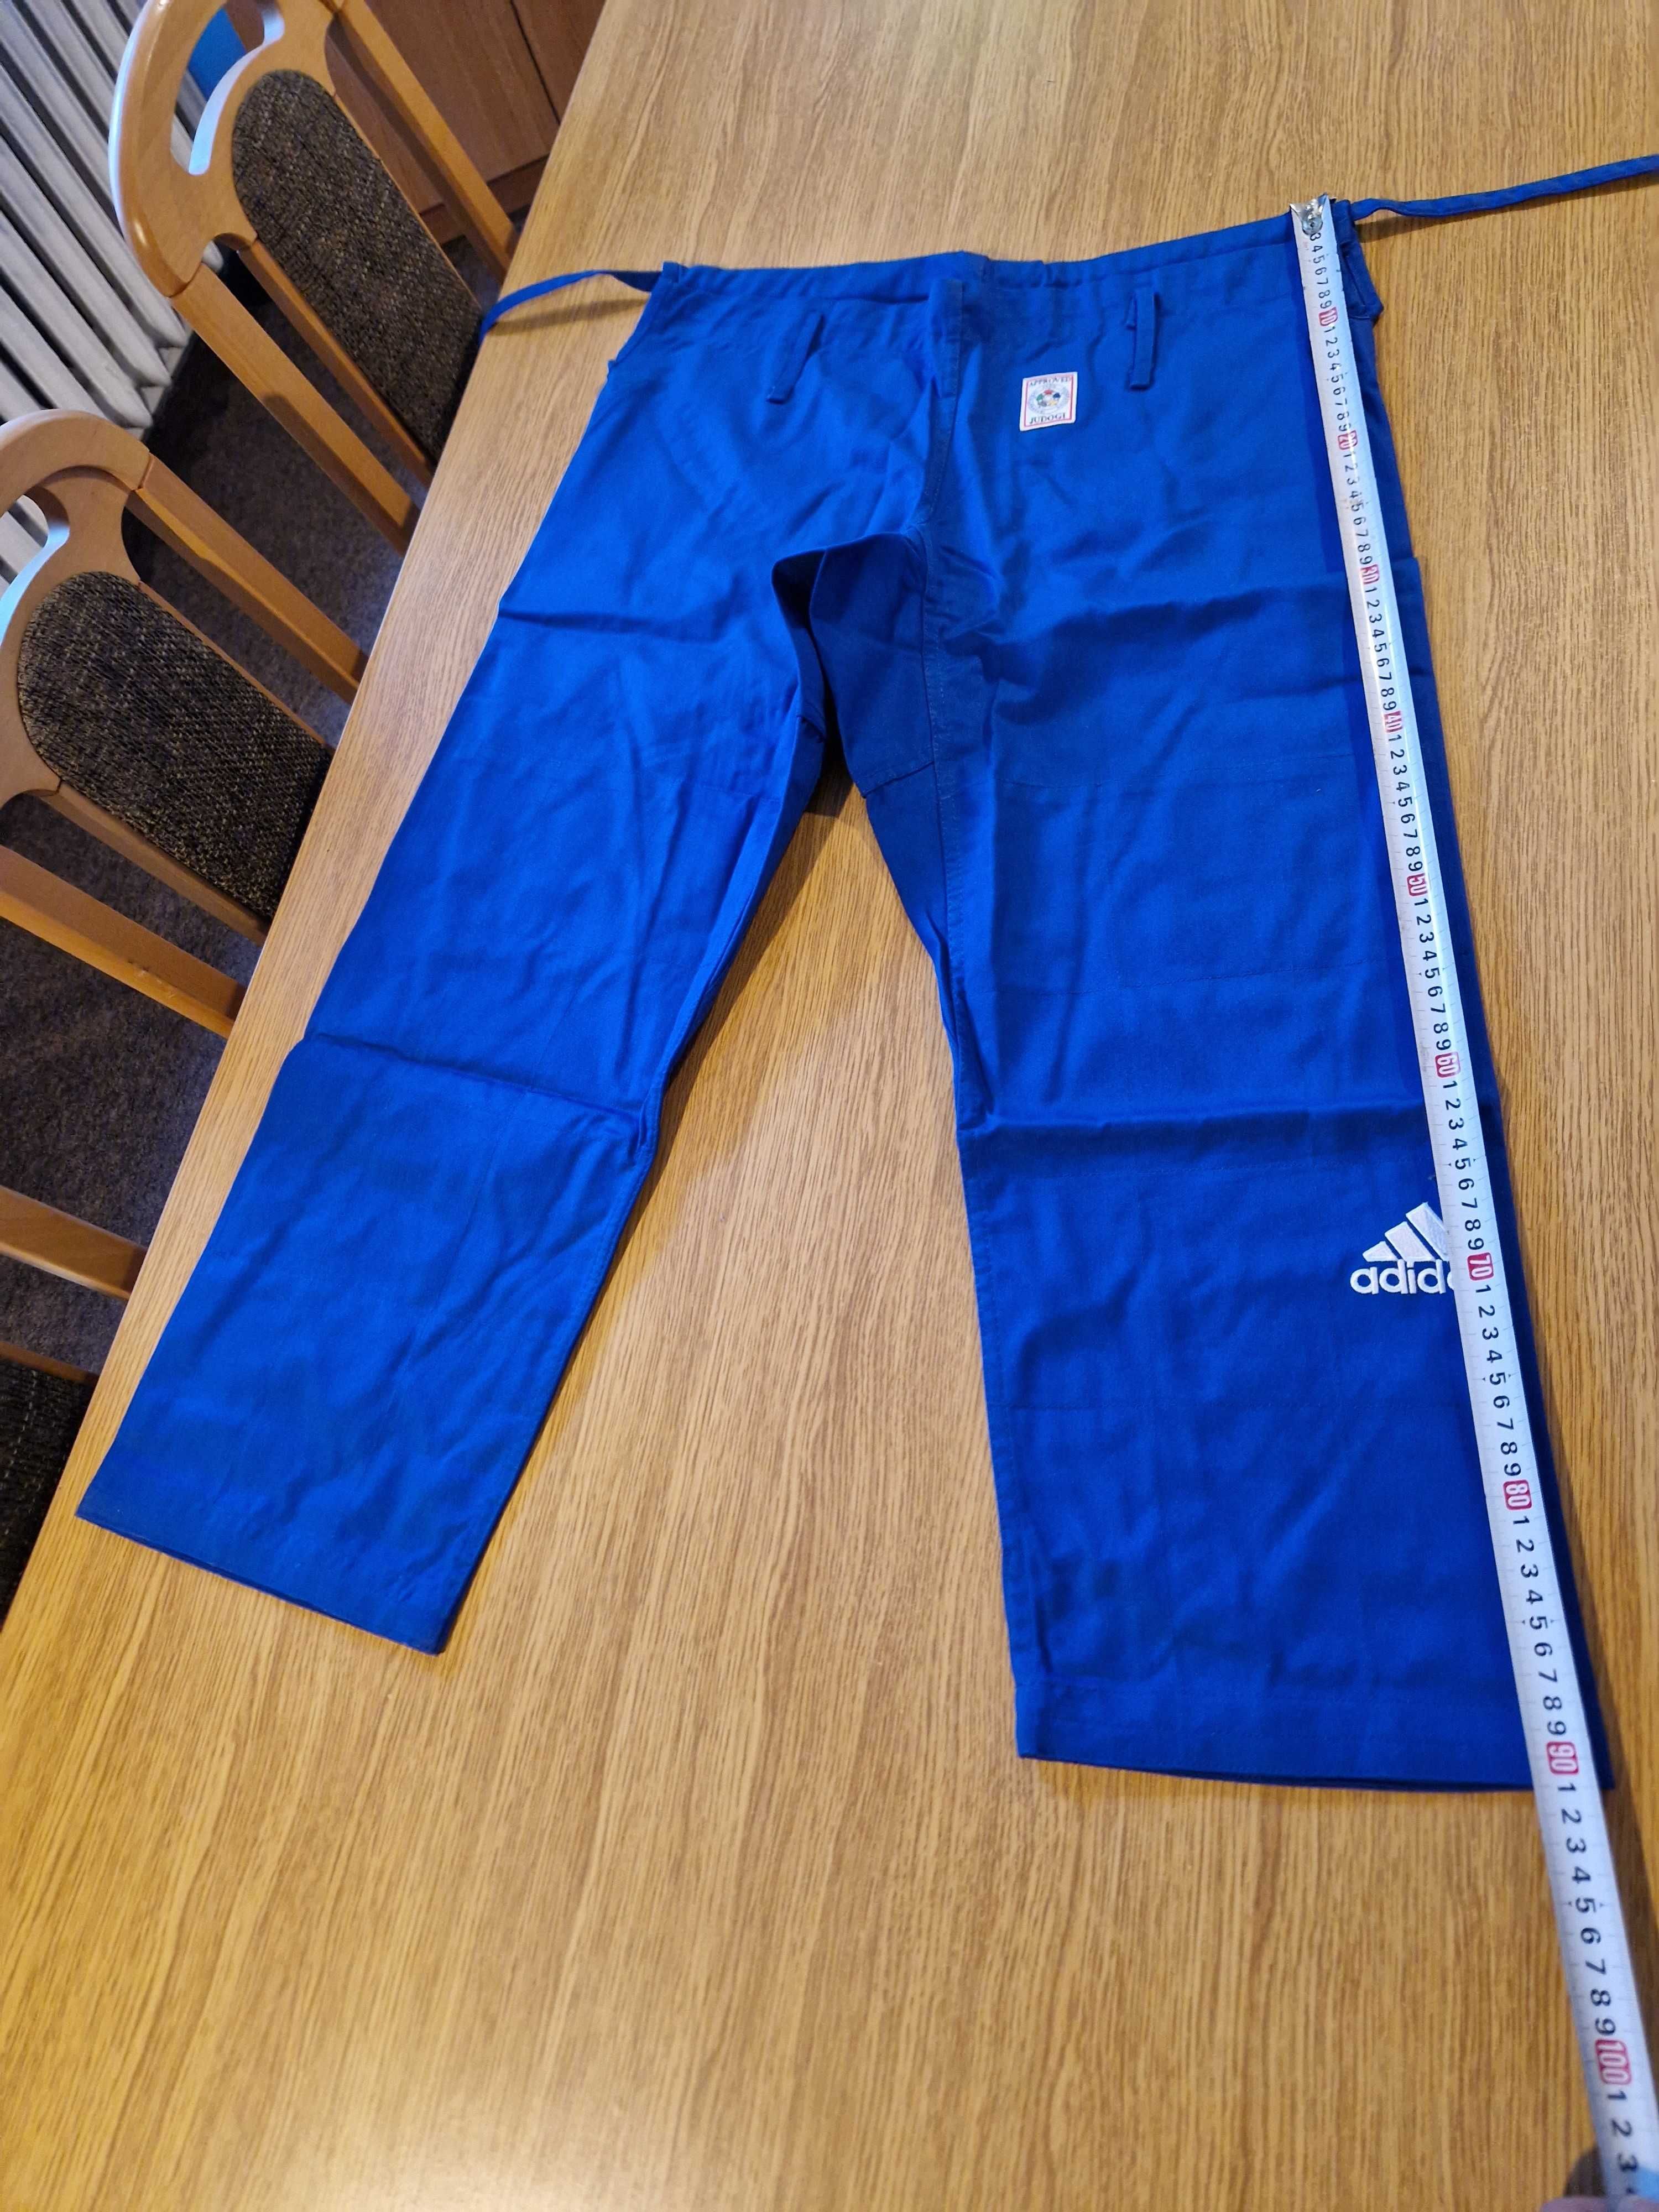 Judoga Adidasa Champion 2 Apprved Blue rozmiar 160 cm
JIJFB